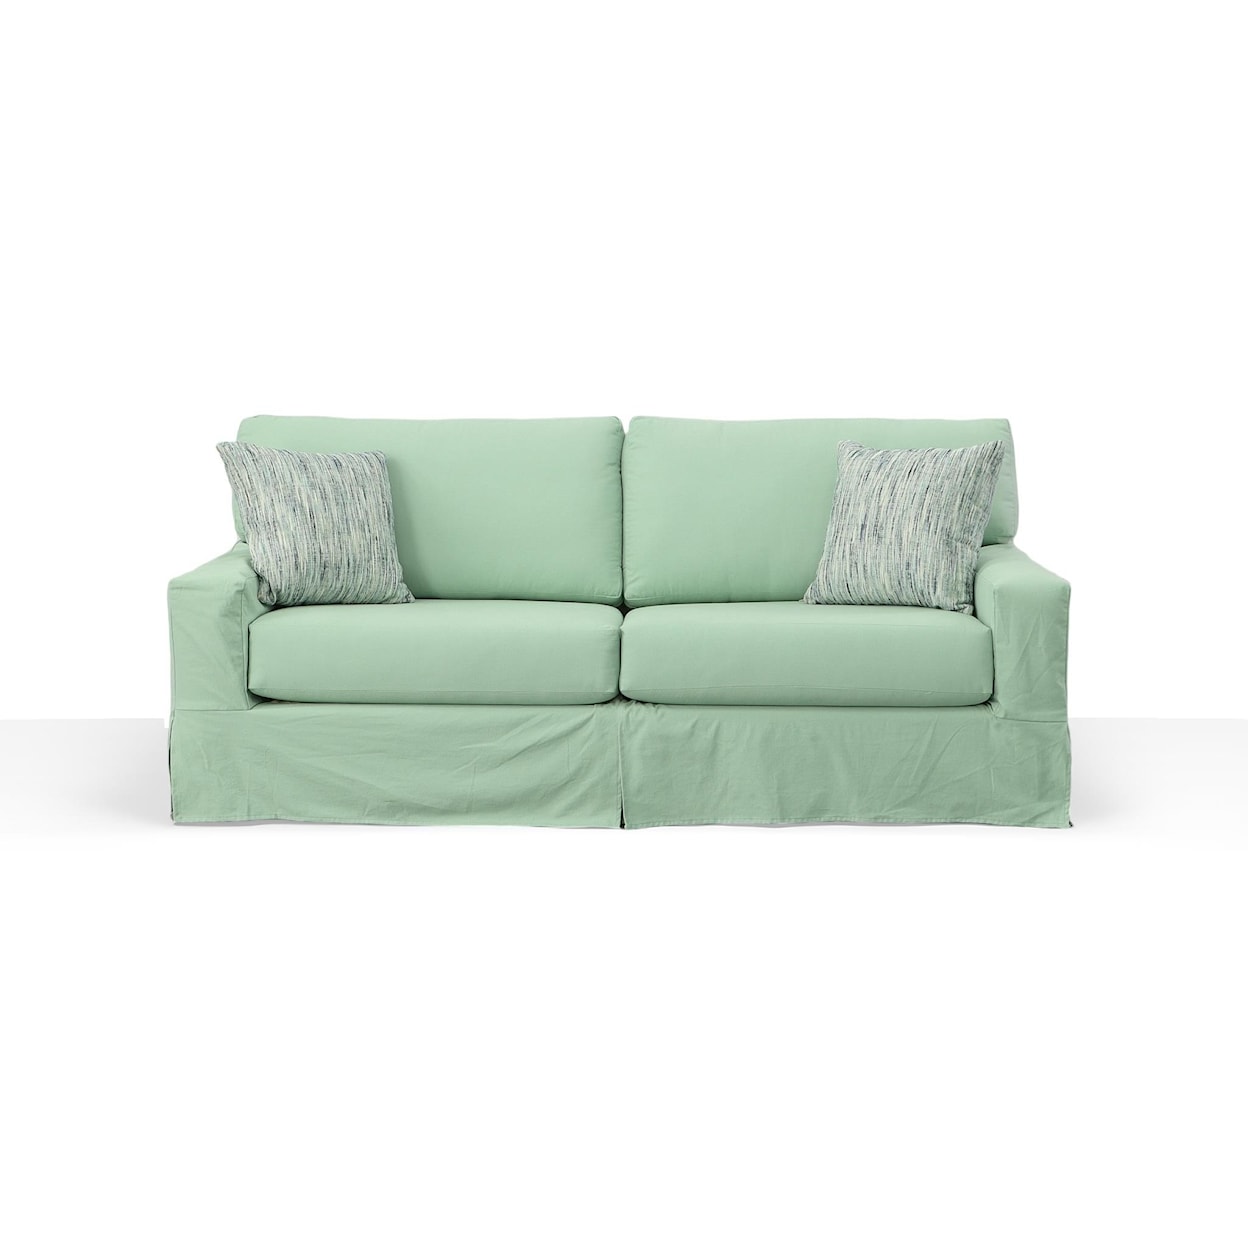 Stone & Leigh Furniture Dawson Slipcover Sofa